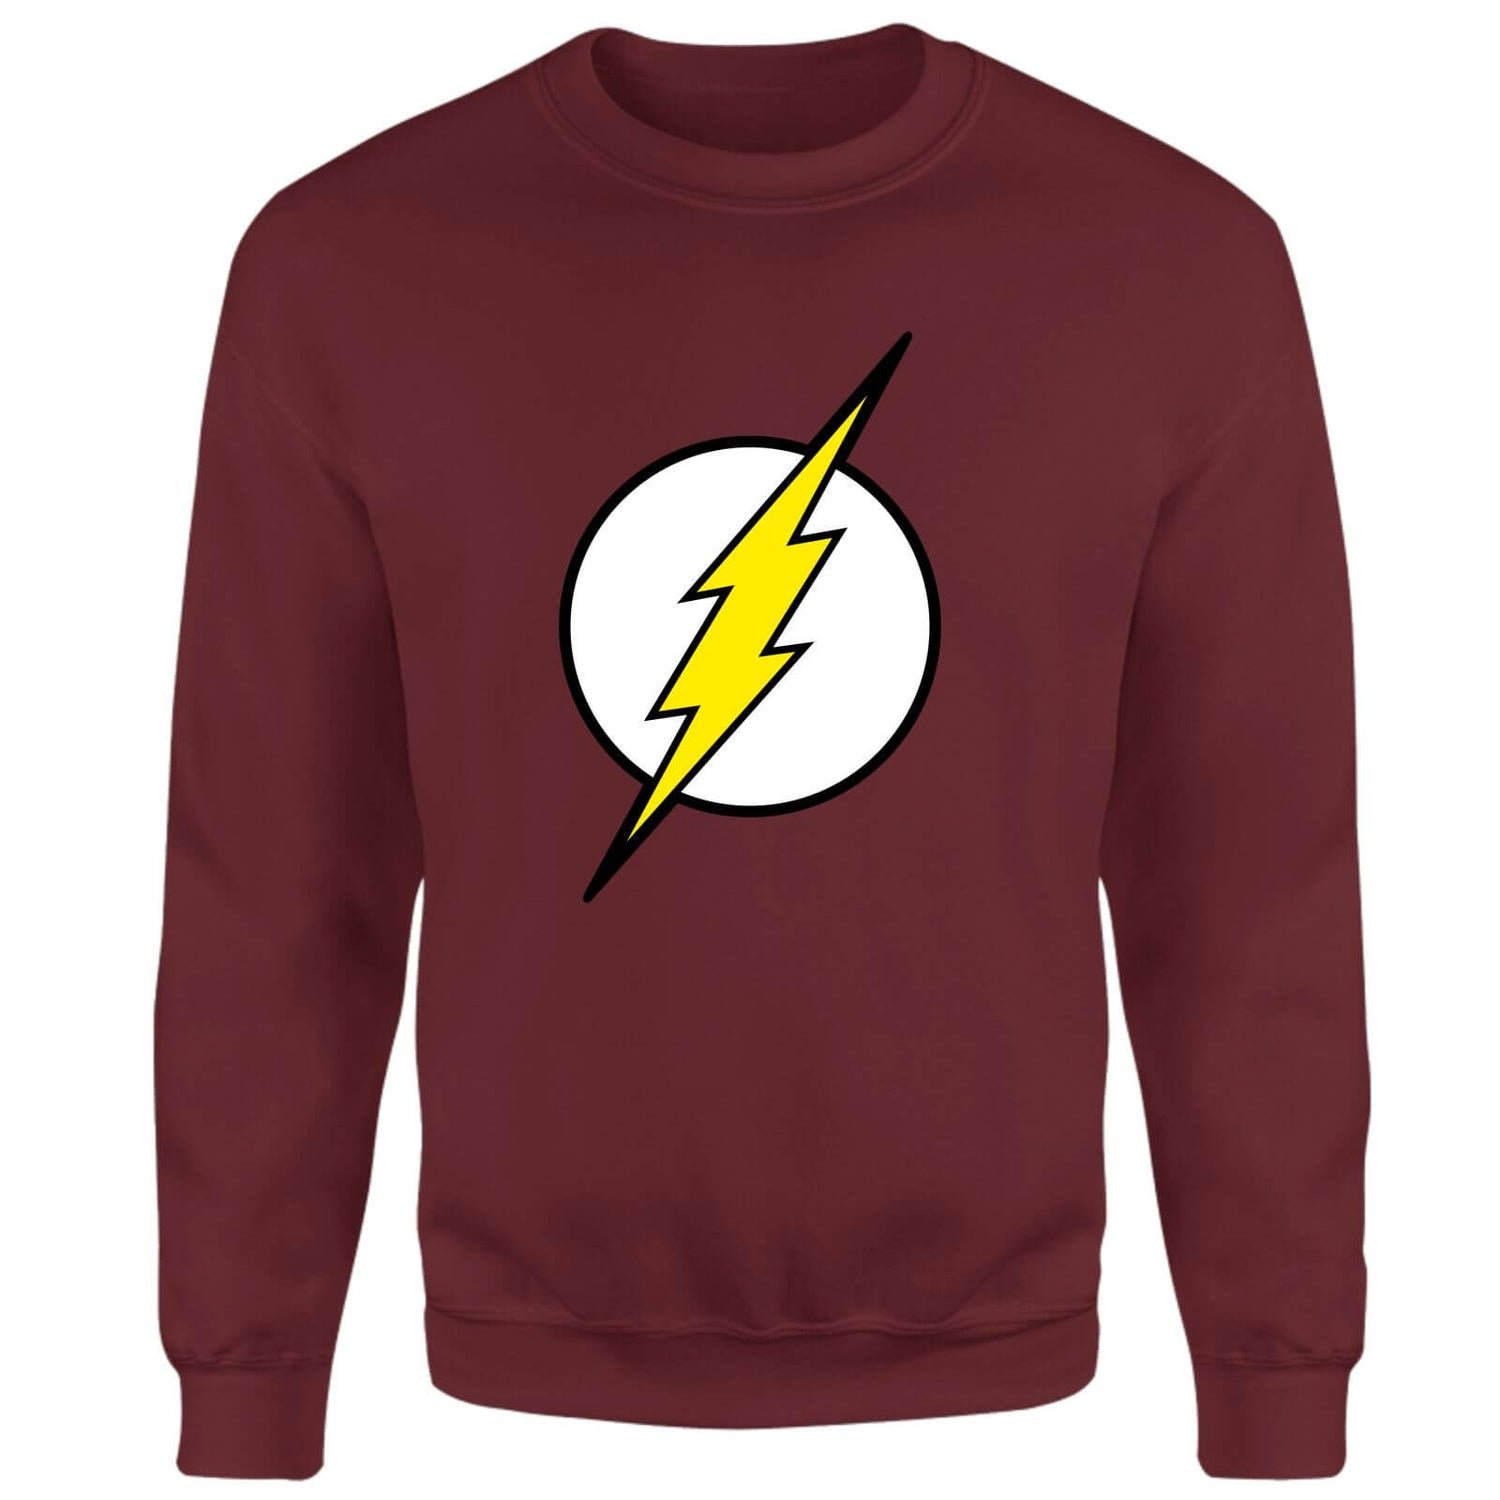 Justice League Flash Logo Sweatshirt - Burgundy - L - Burgundy